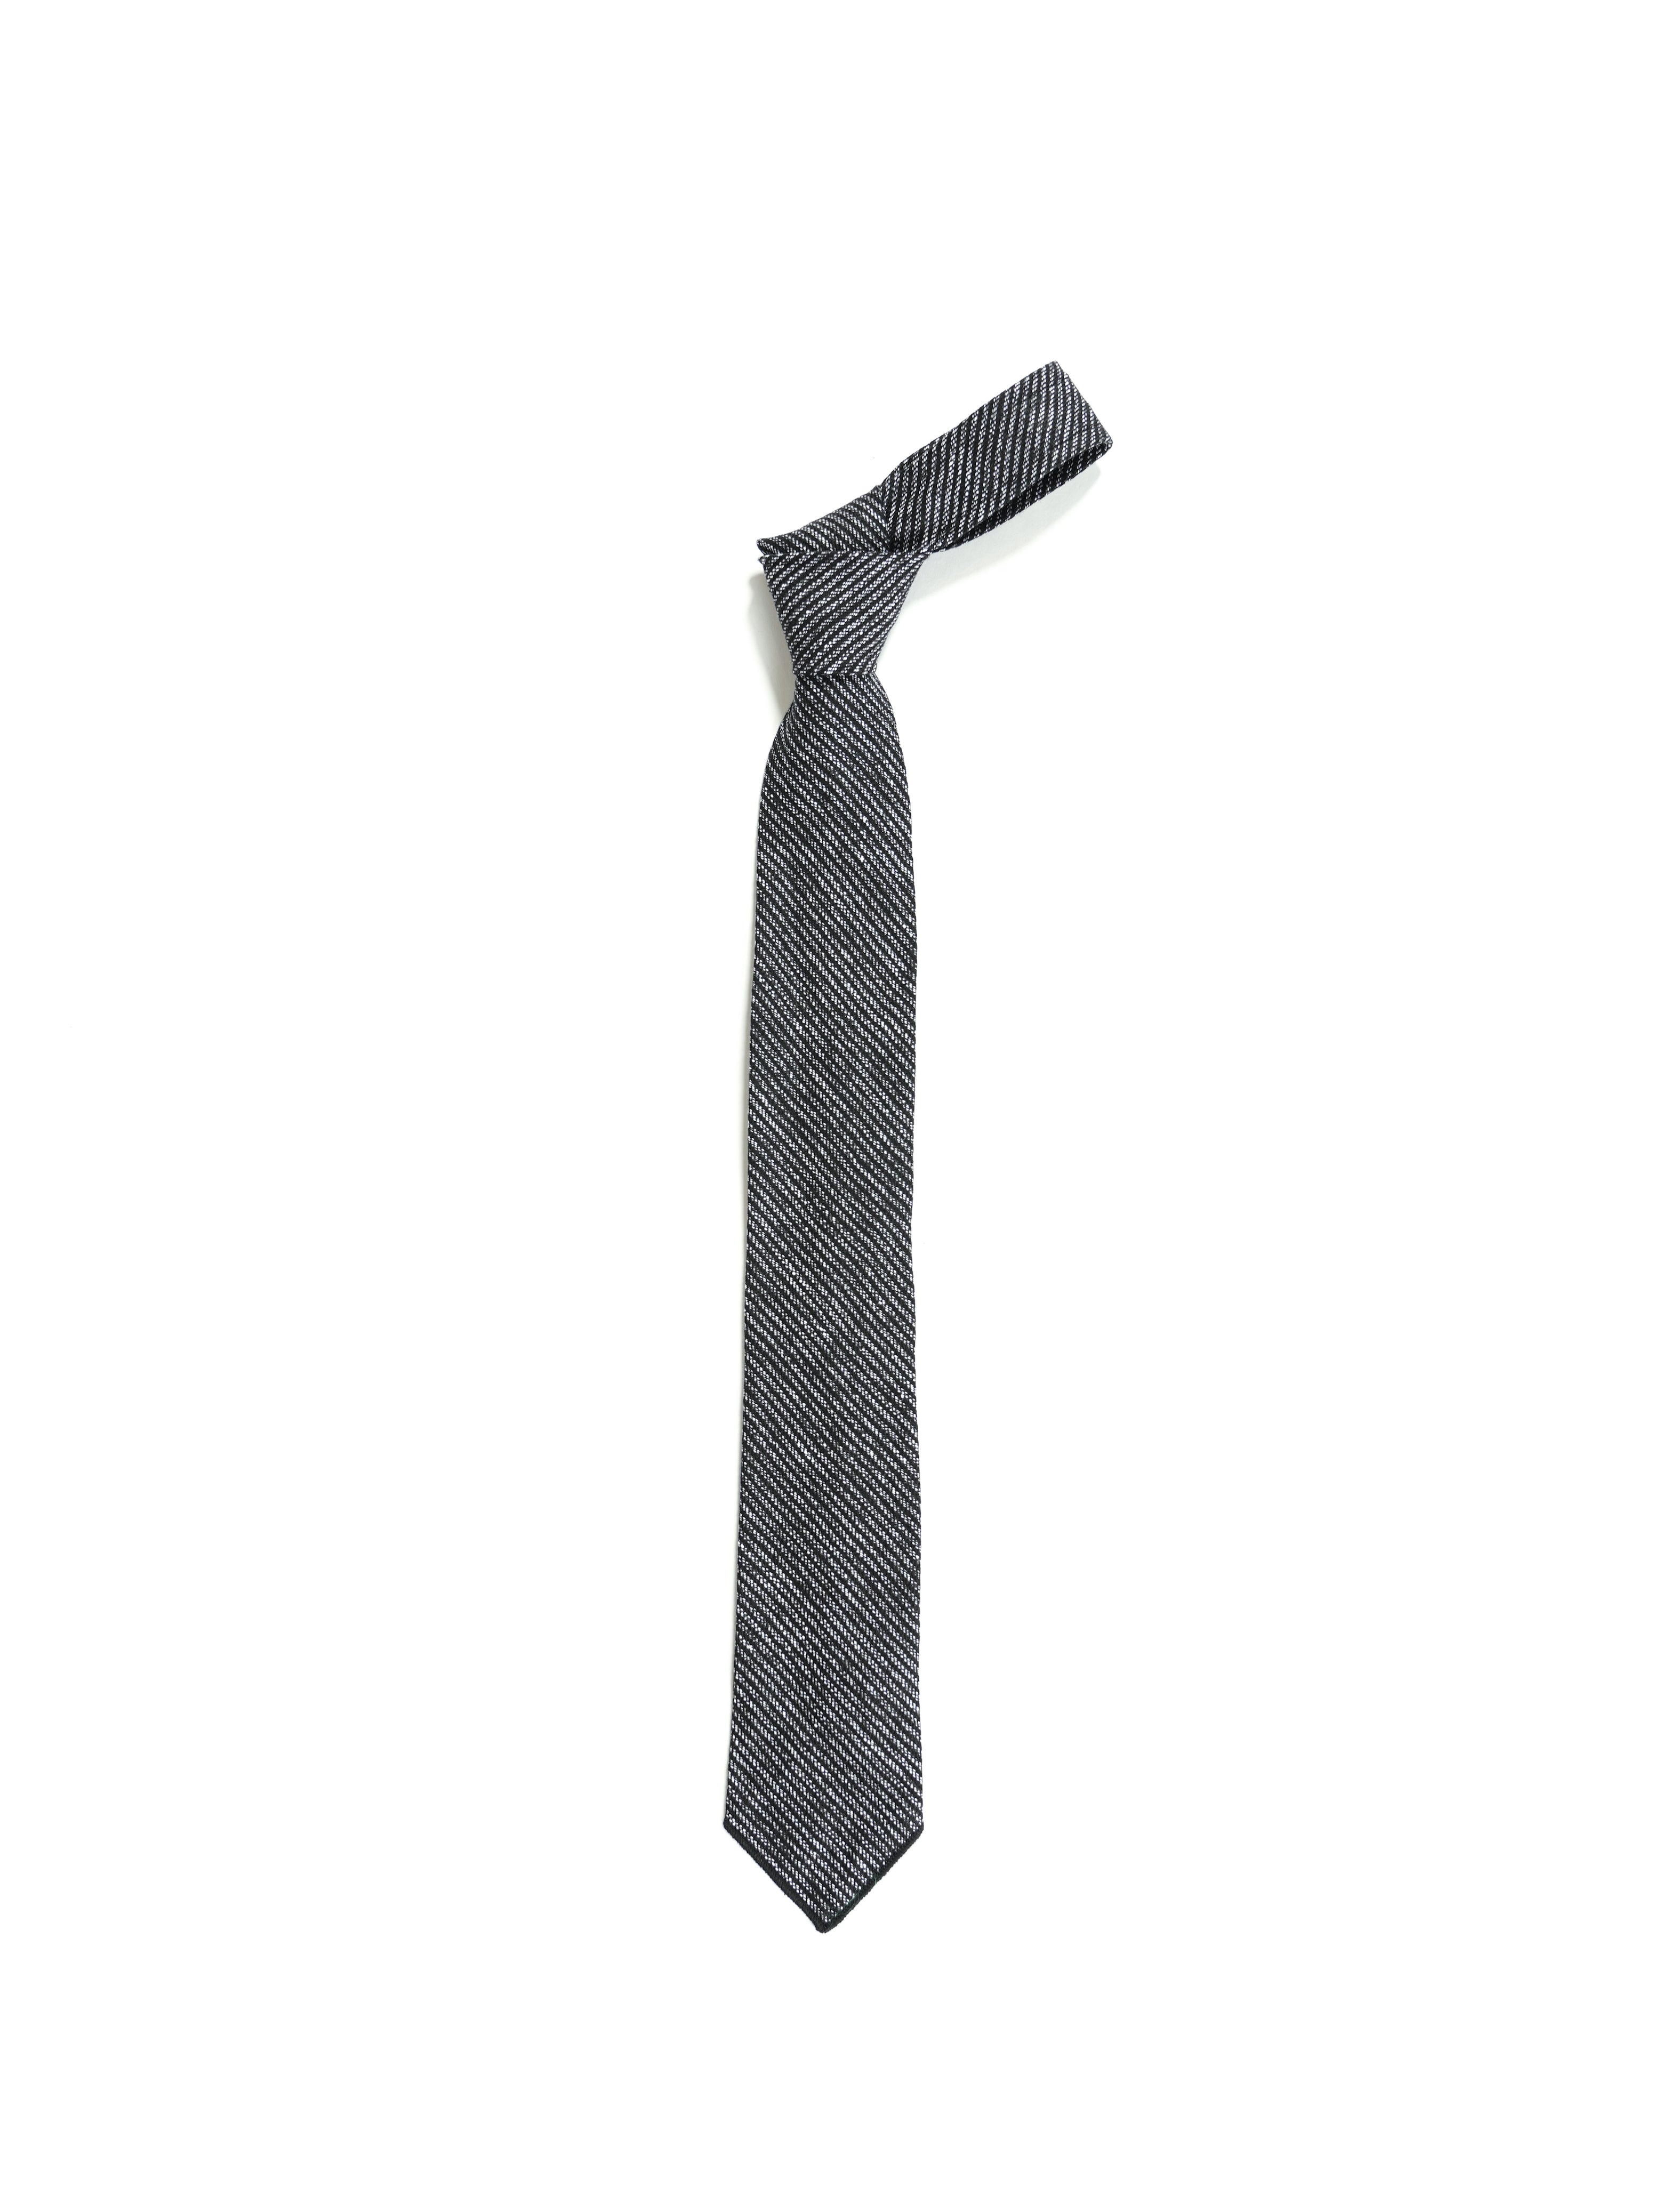 Neck Tie - Black / Grey Linen Stripe